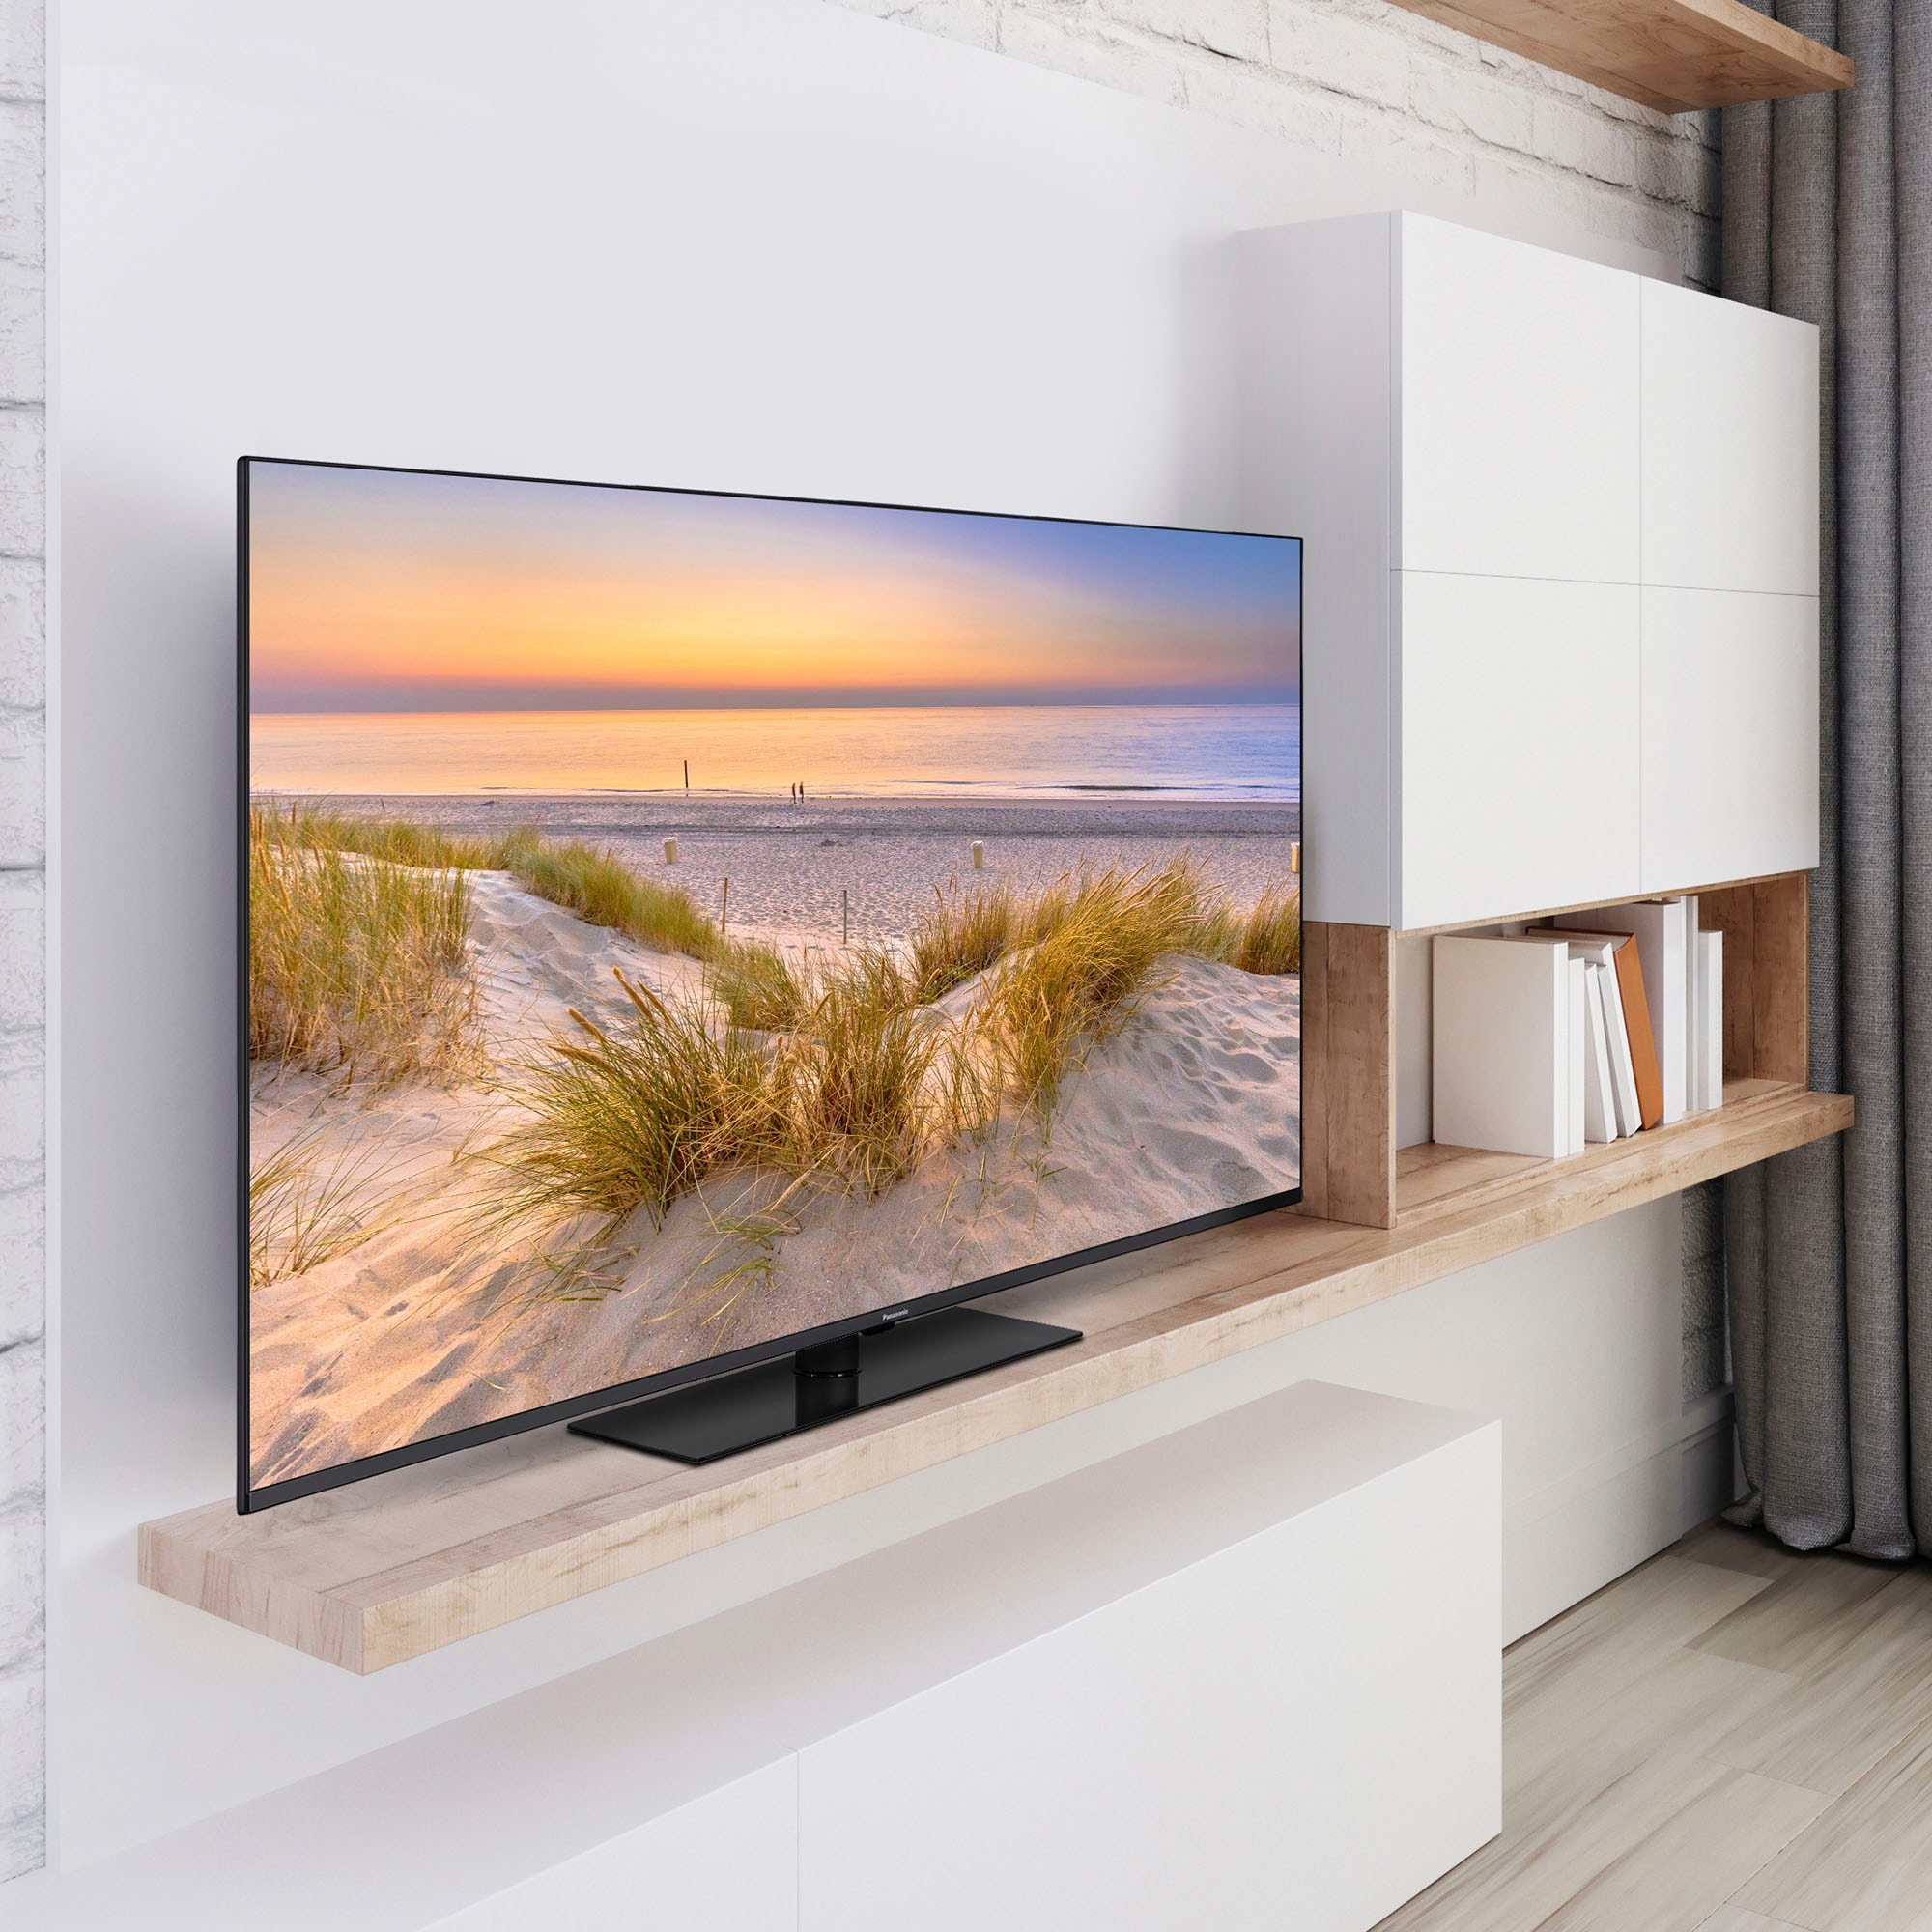 Panasonic LED-Fernseher »TX-65MX700E«, 164 cm/65 Zoll, 4K Ultra HD, Google TV